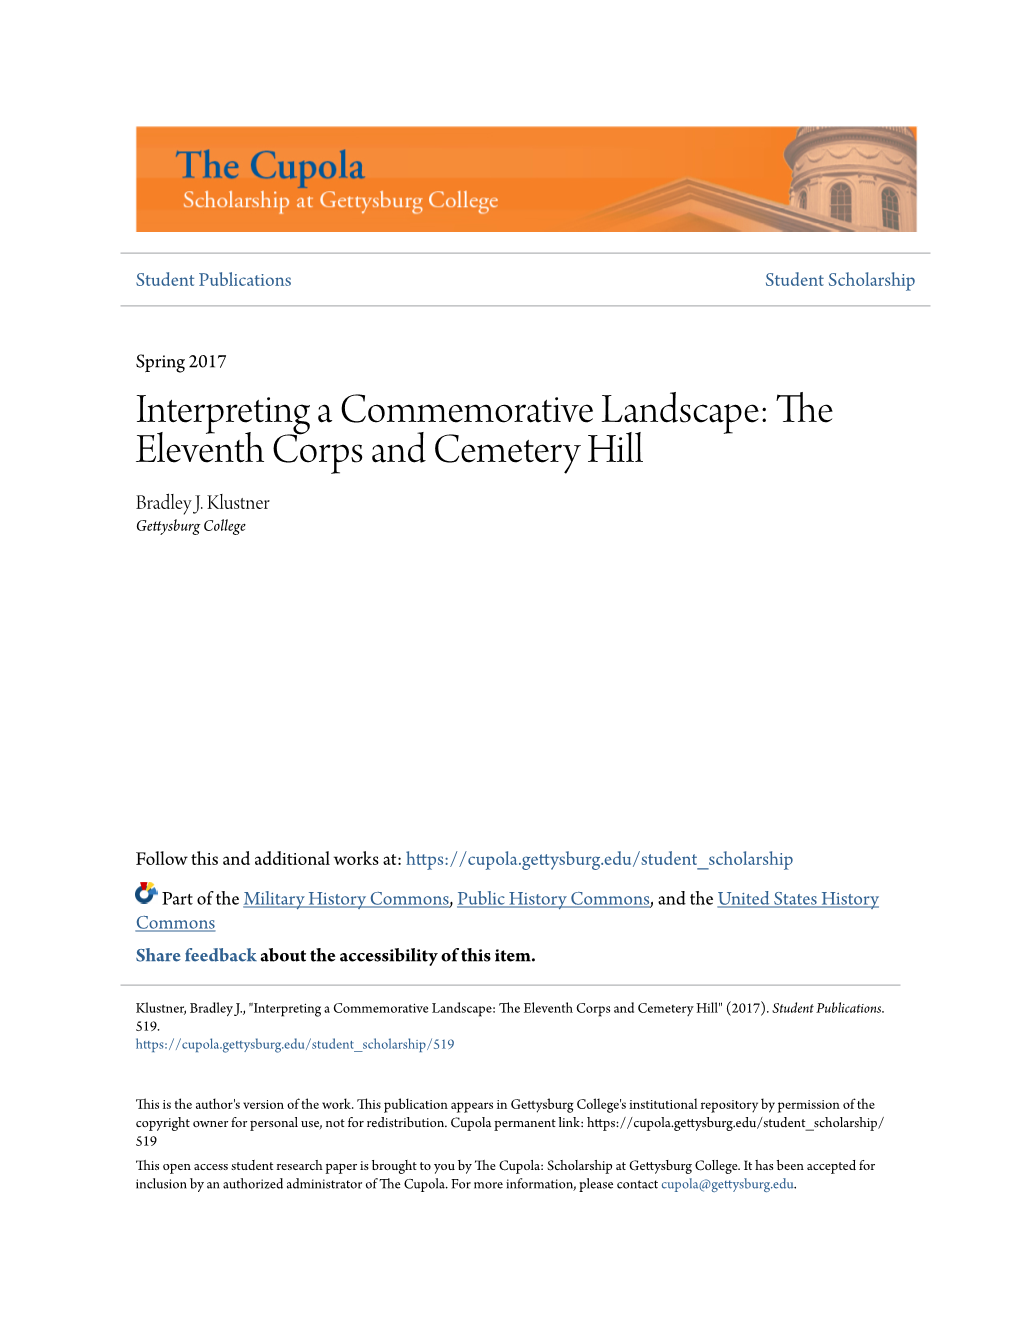 Interpreting a Commemorative Landscape: the Eleventh Corps and Cemetery Hill Bradley J